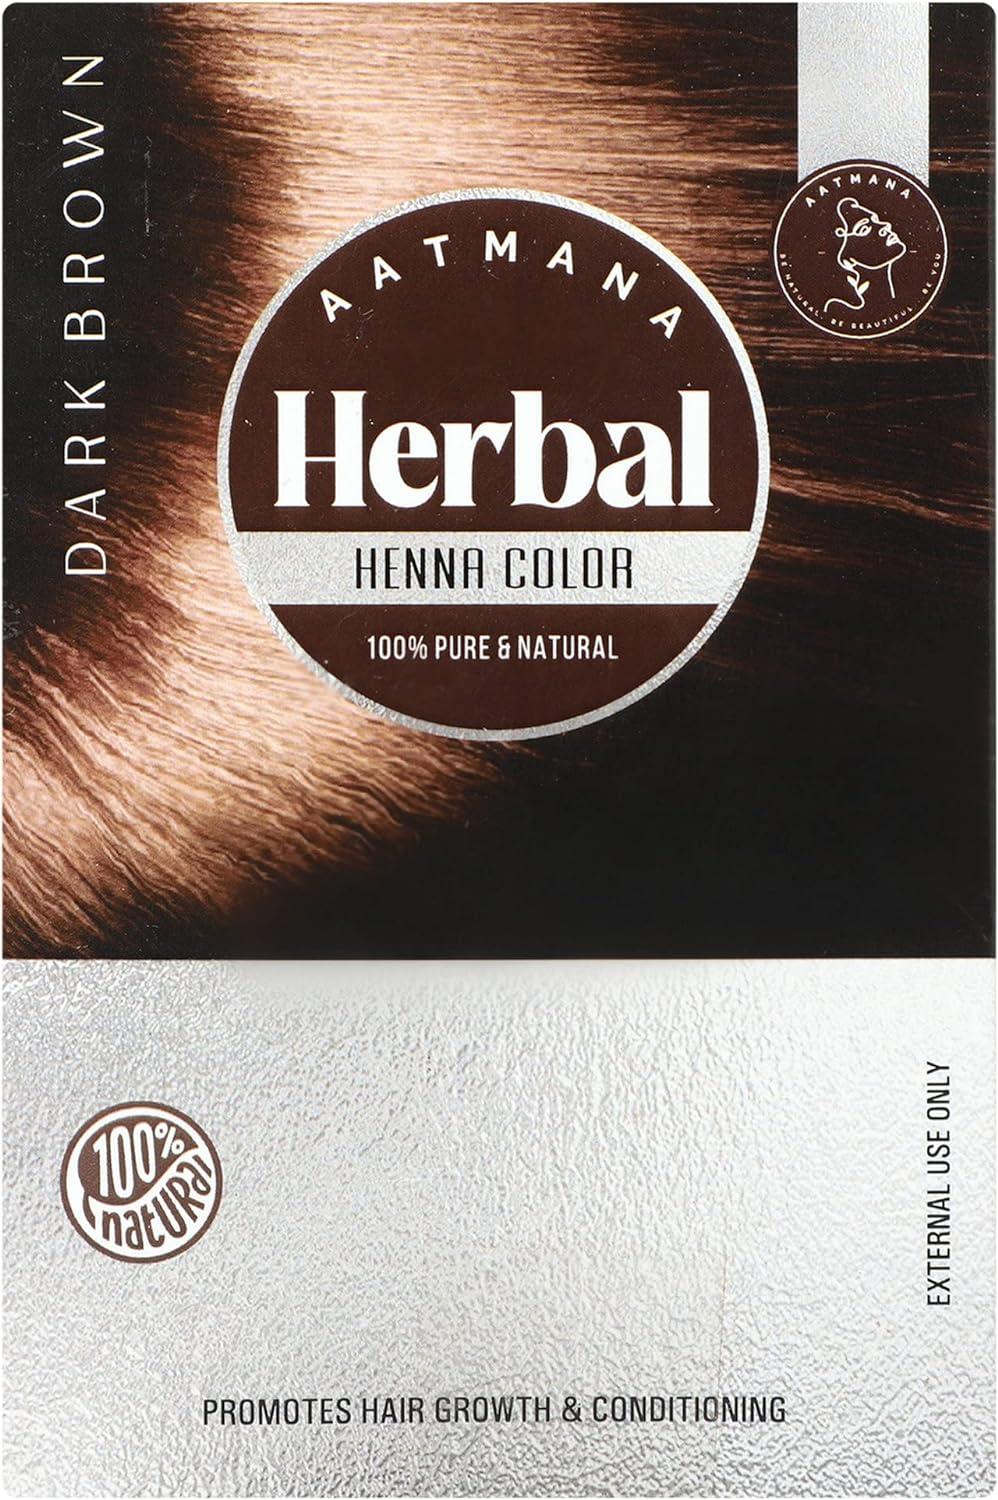 HENNAUSA.COM USA WHOLESALERS & RETAILERS for Mehandi Henna Mehandi Mehndi  Bridal Dulhan Mehanid COnes & Powder paste tube cone Herbal Hair Color dye  needs USA Wholesalers & Retailers